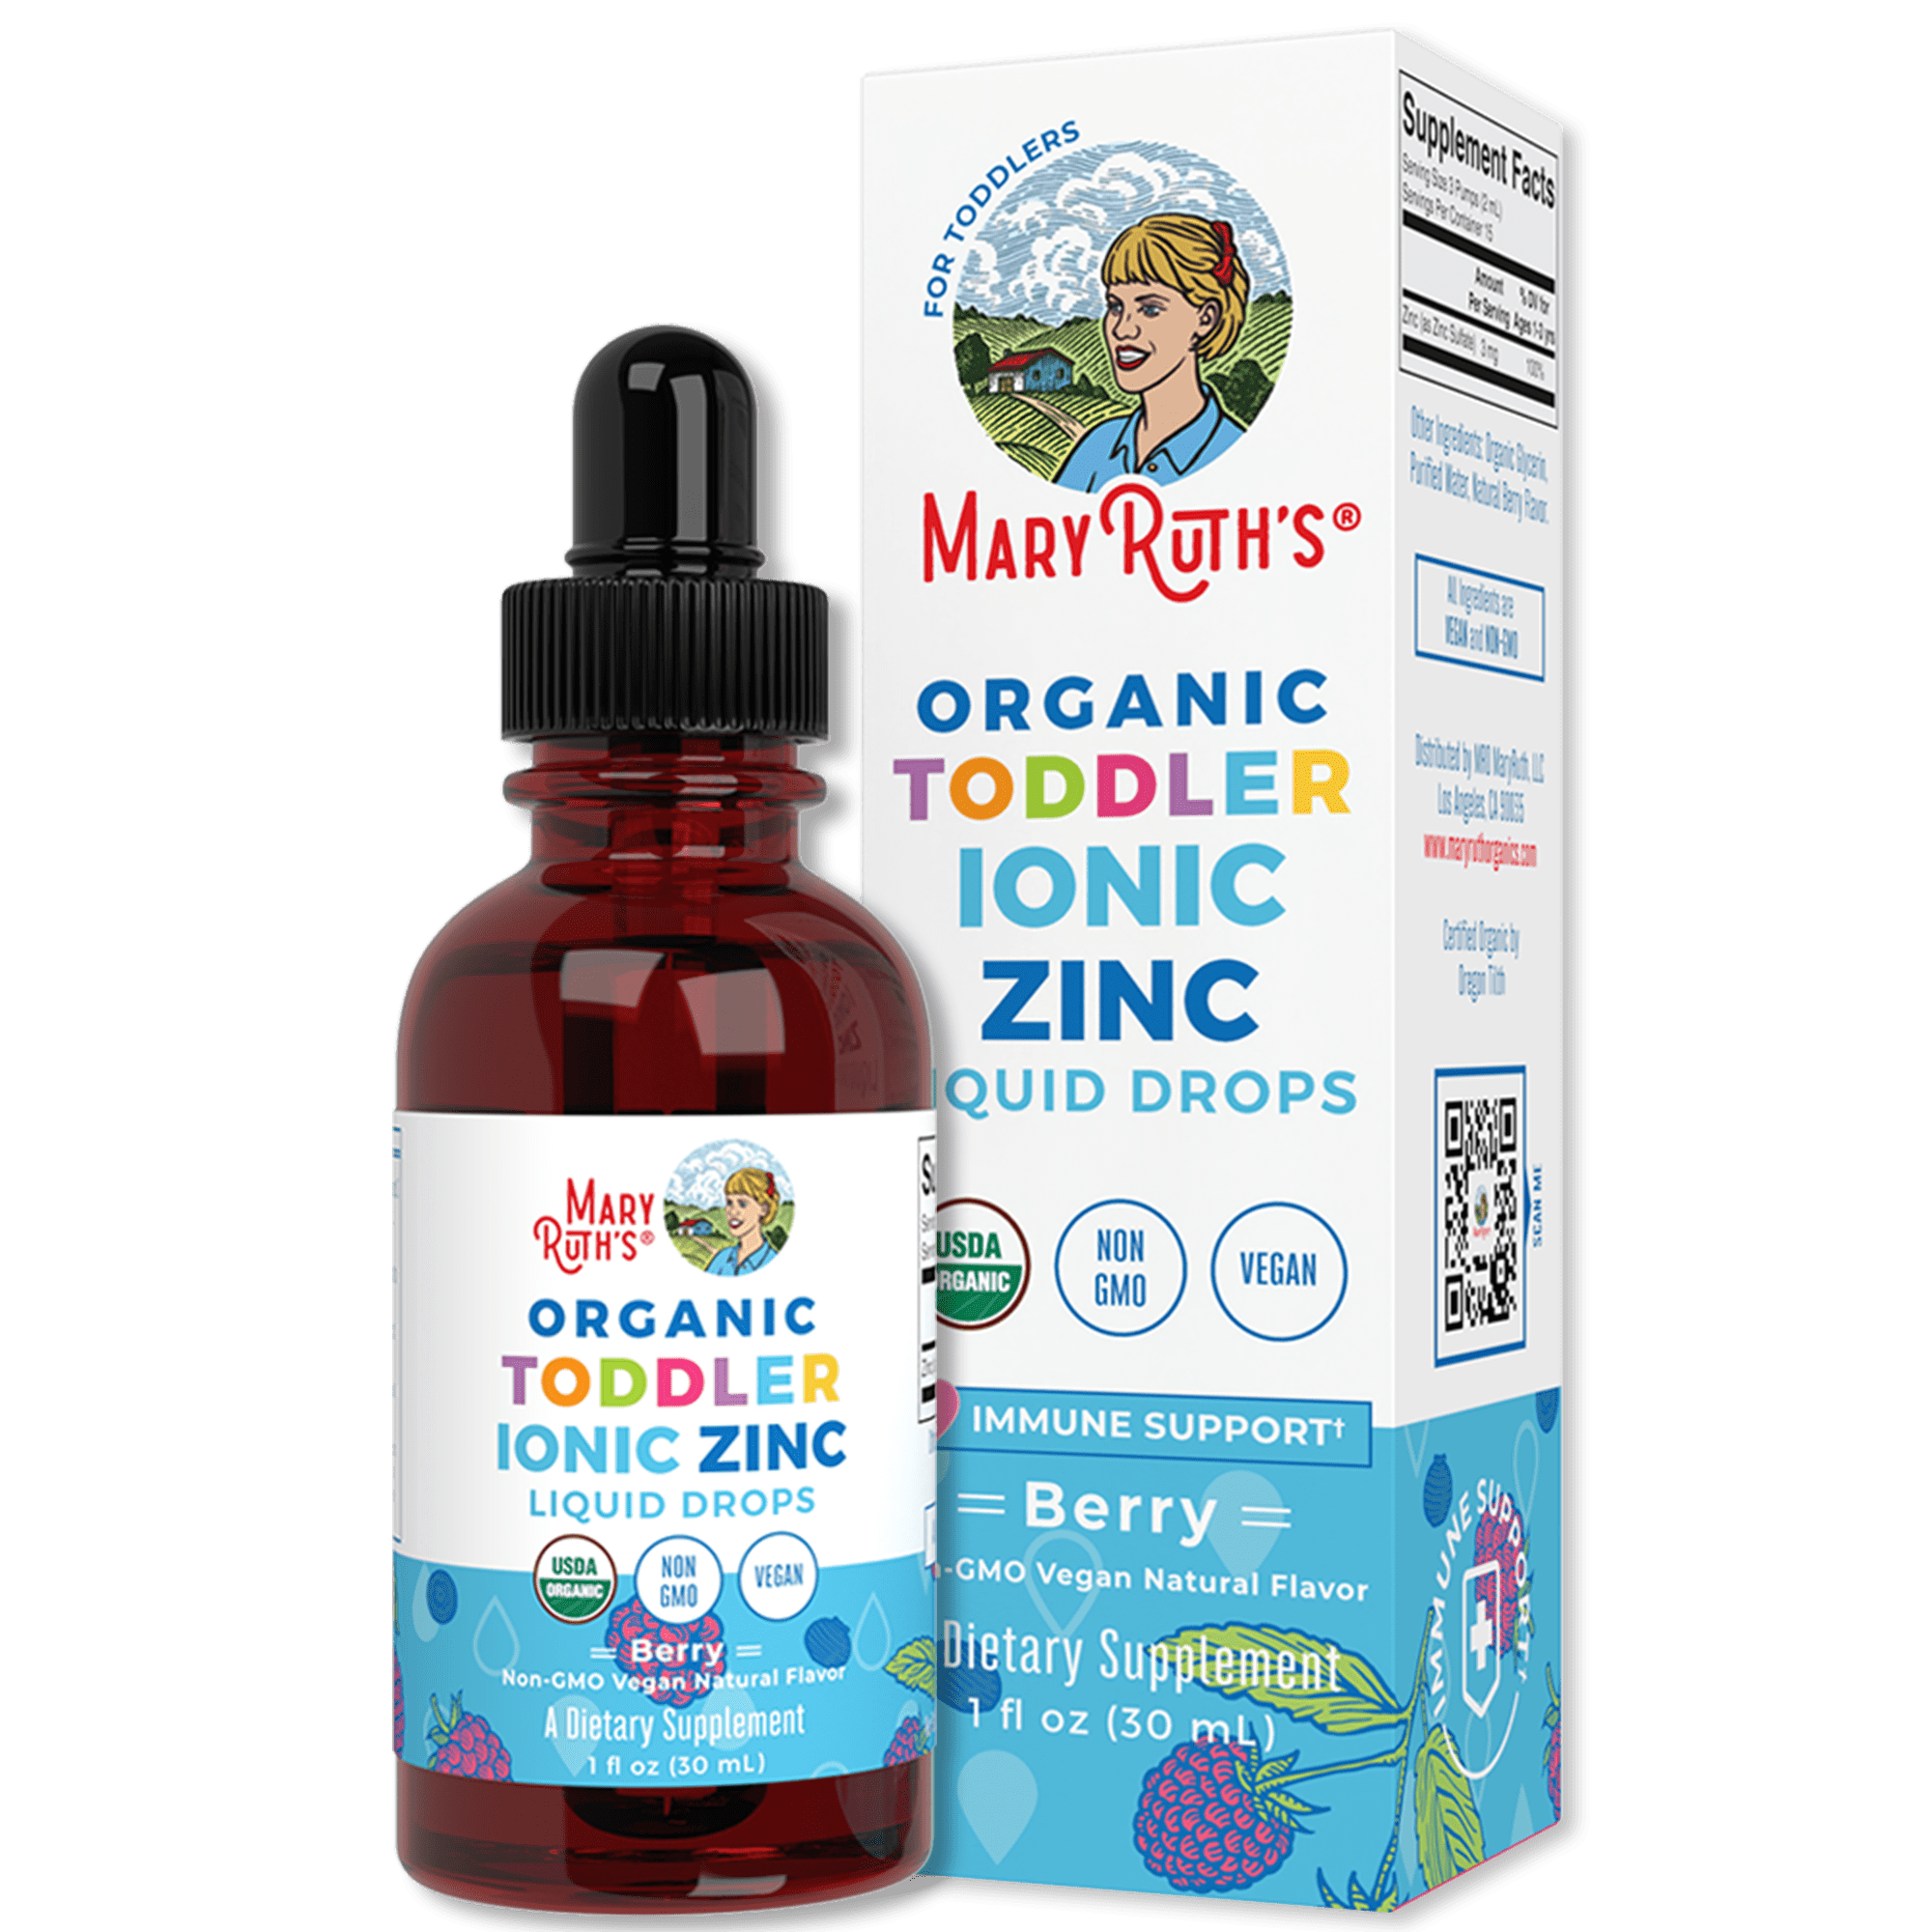 MaryRuth's Organic Toddler Ionic Zinc, Liquid Drops, 1 fl oz, Immune Support Supplement